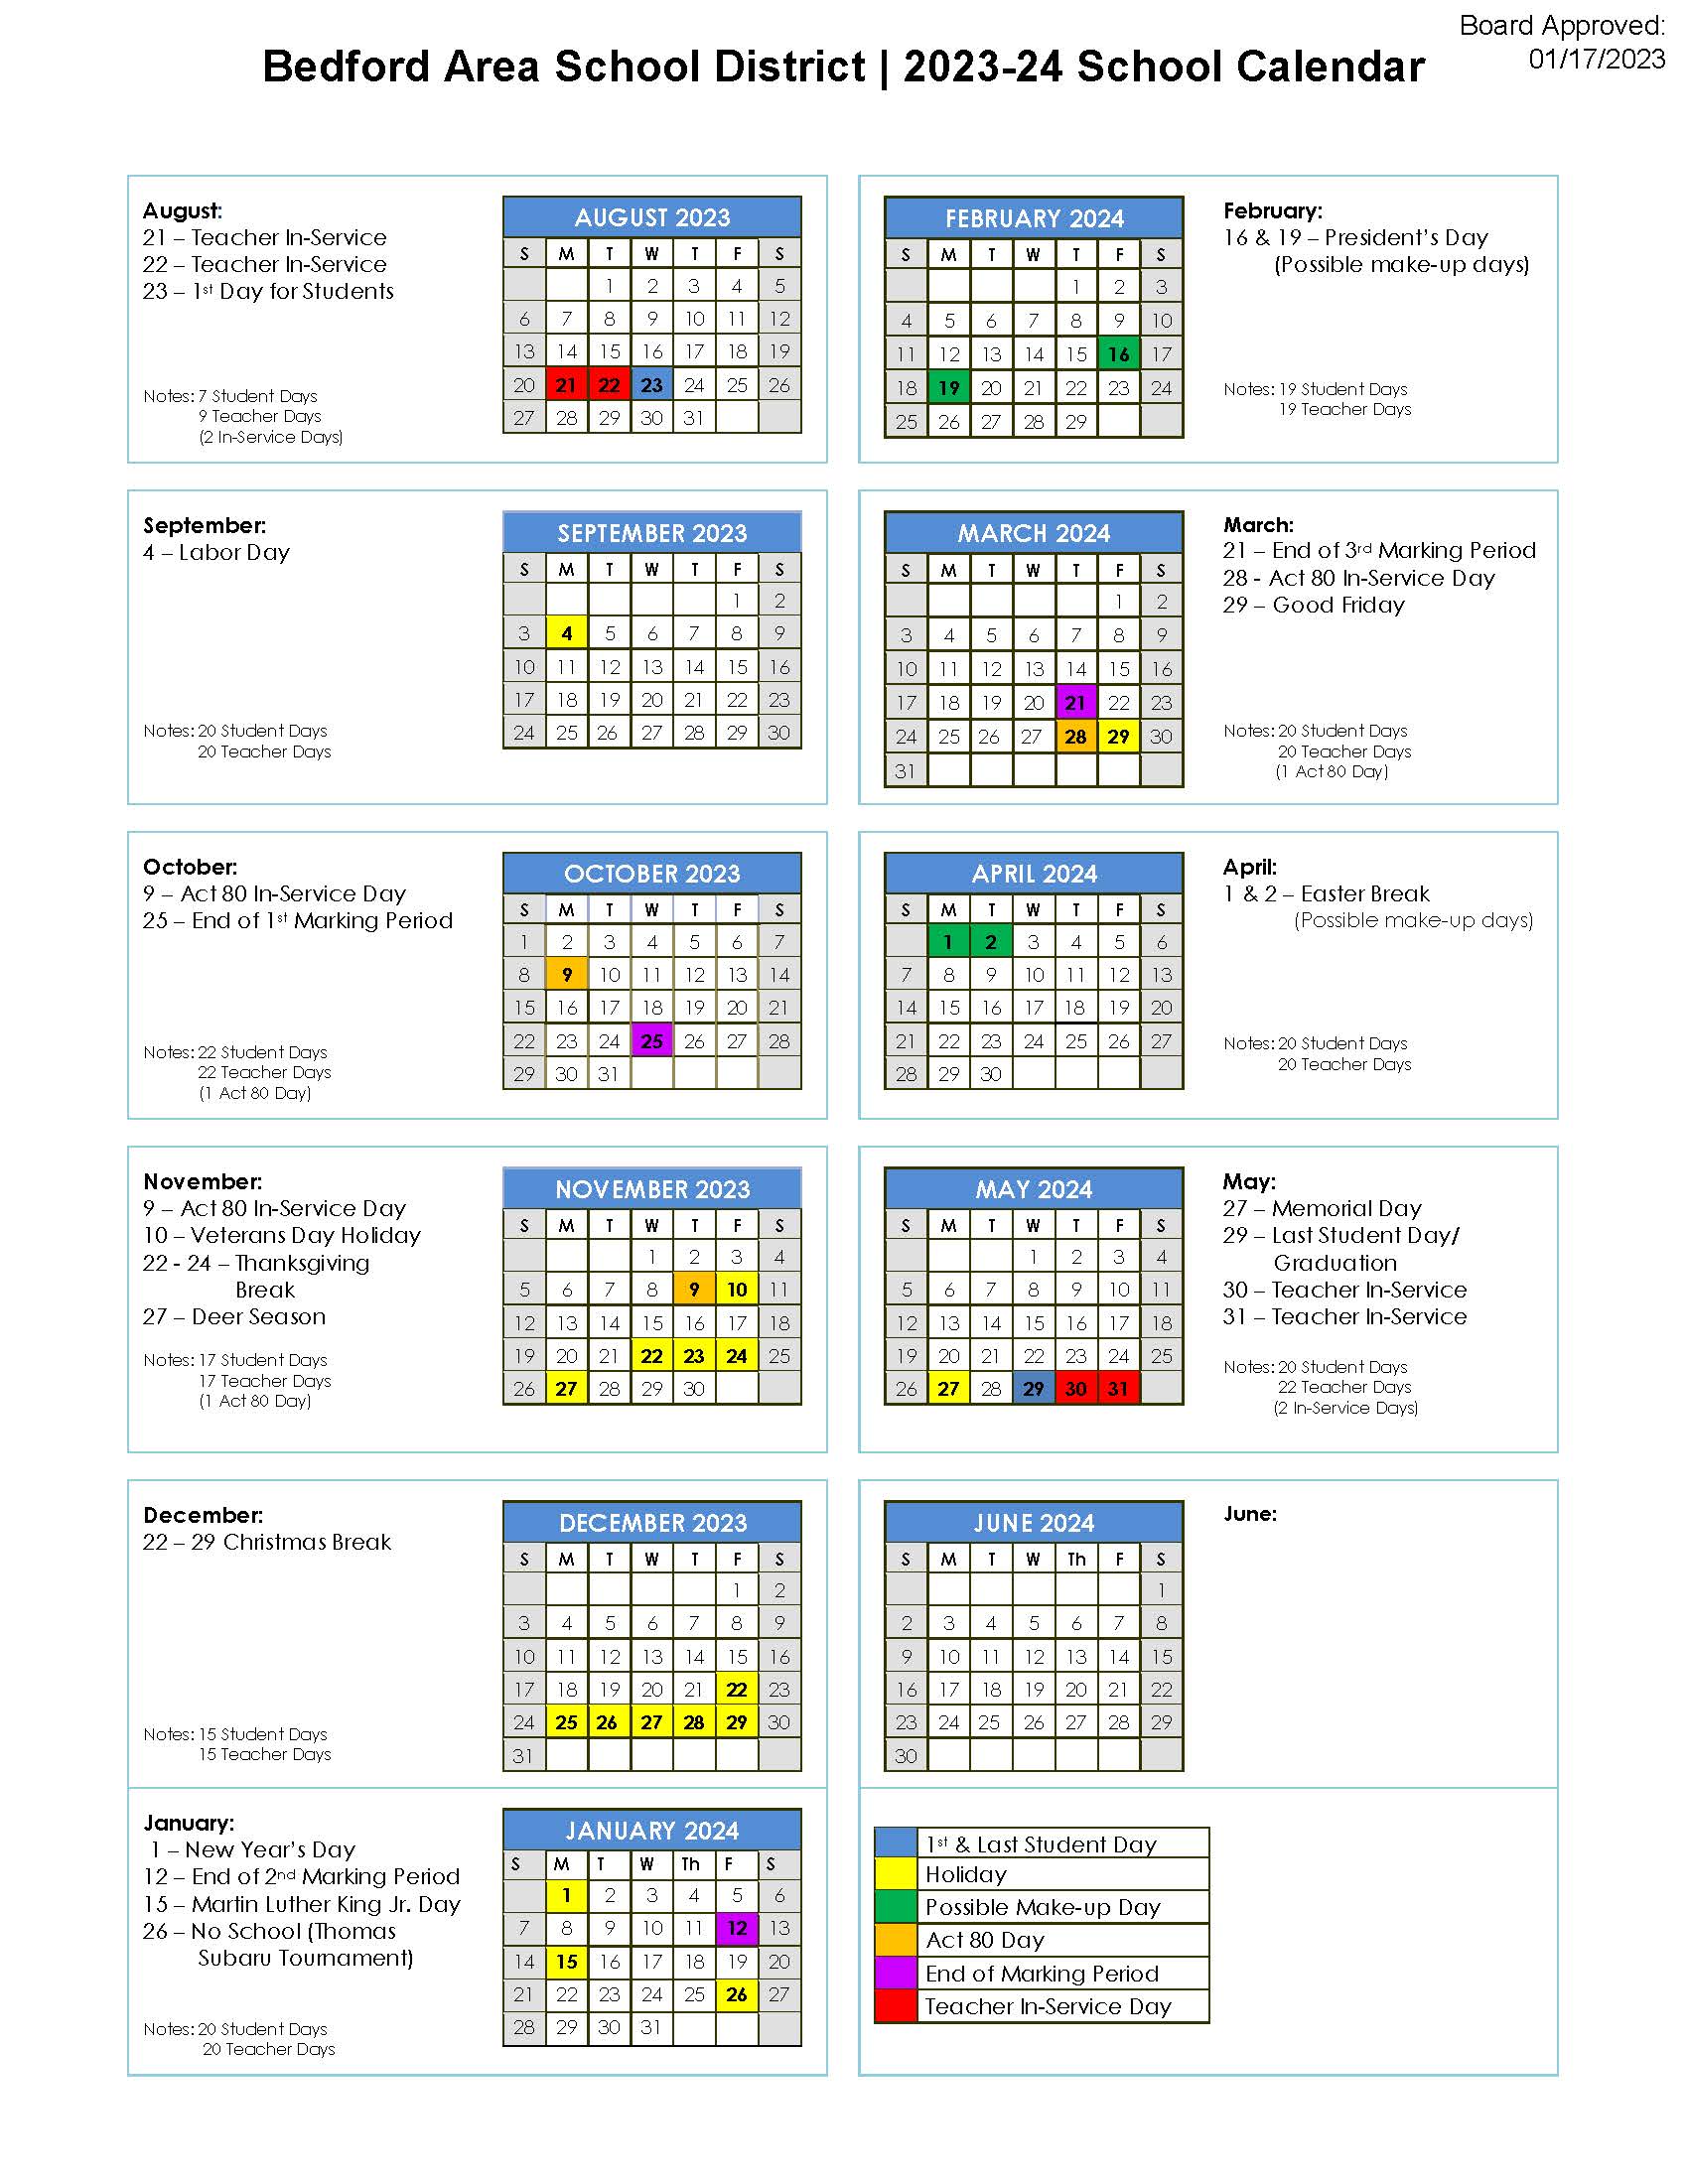 Bedford Nh School Calendar 2025 - alanna cathrin